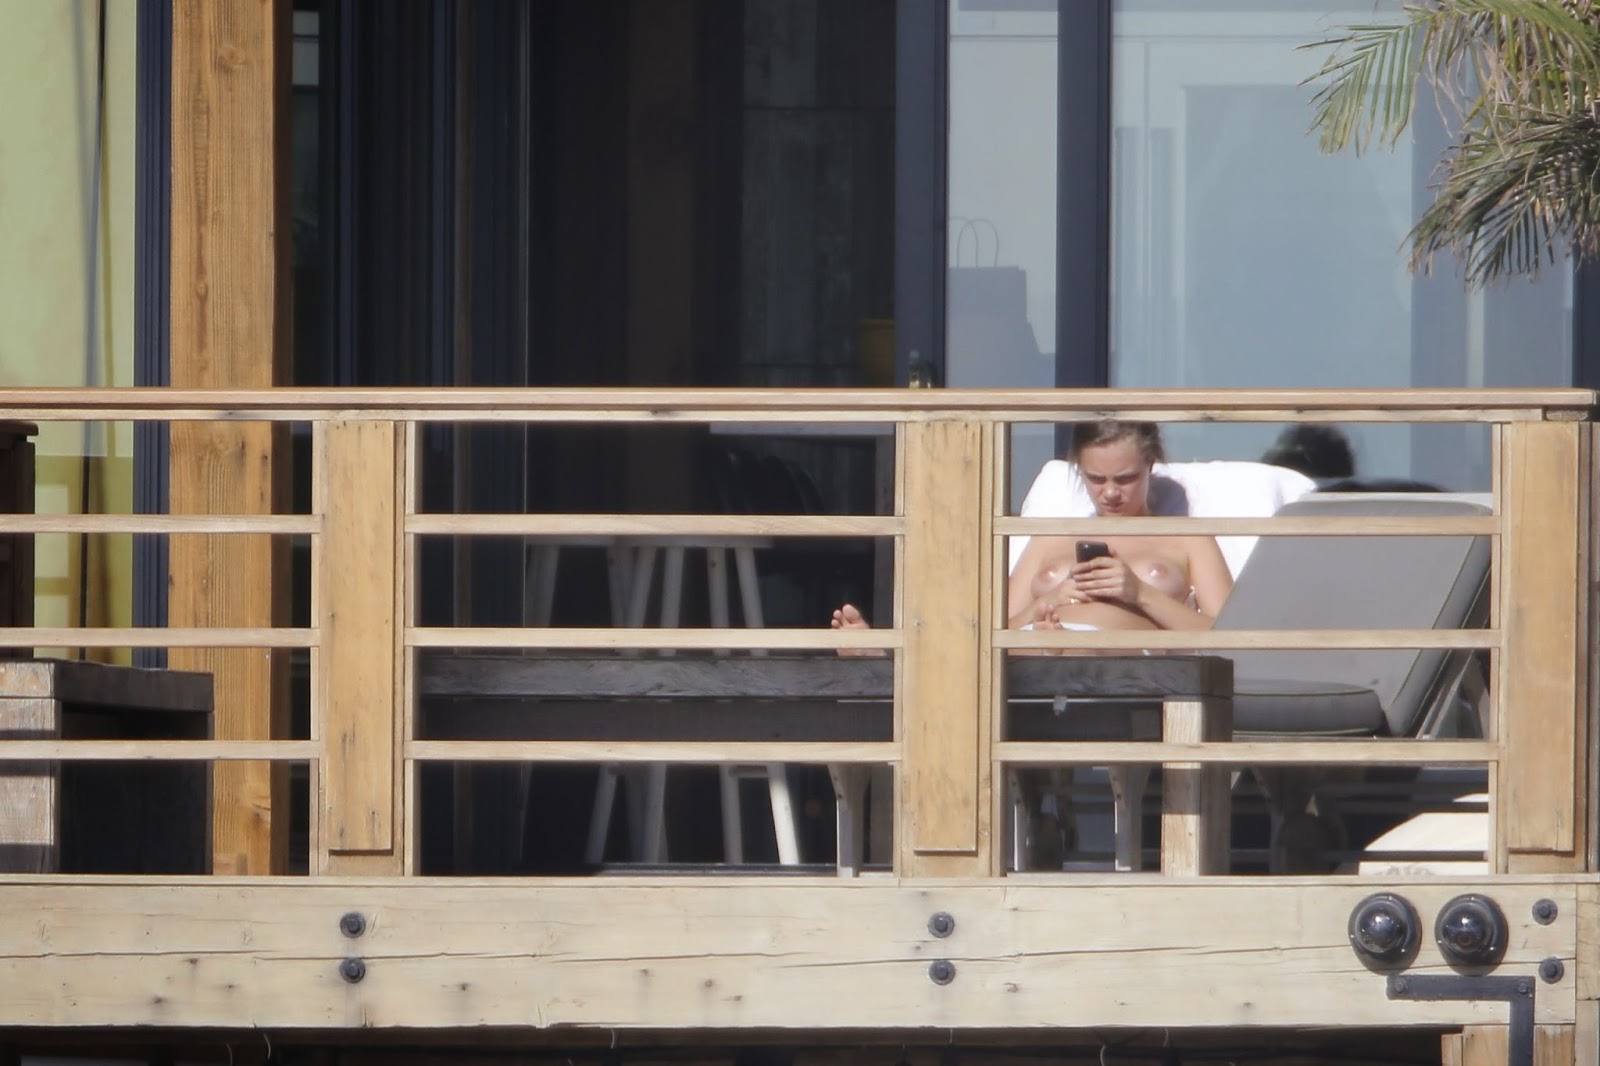 Cara Delevingne Bikini Photos Sunbathing On A Balcony.